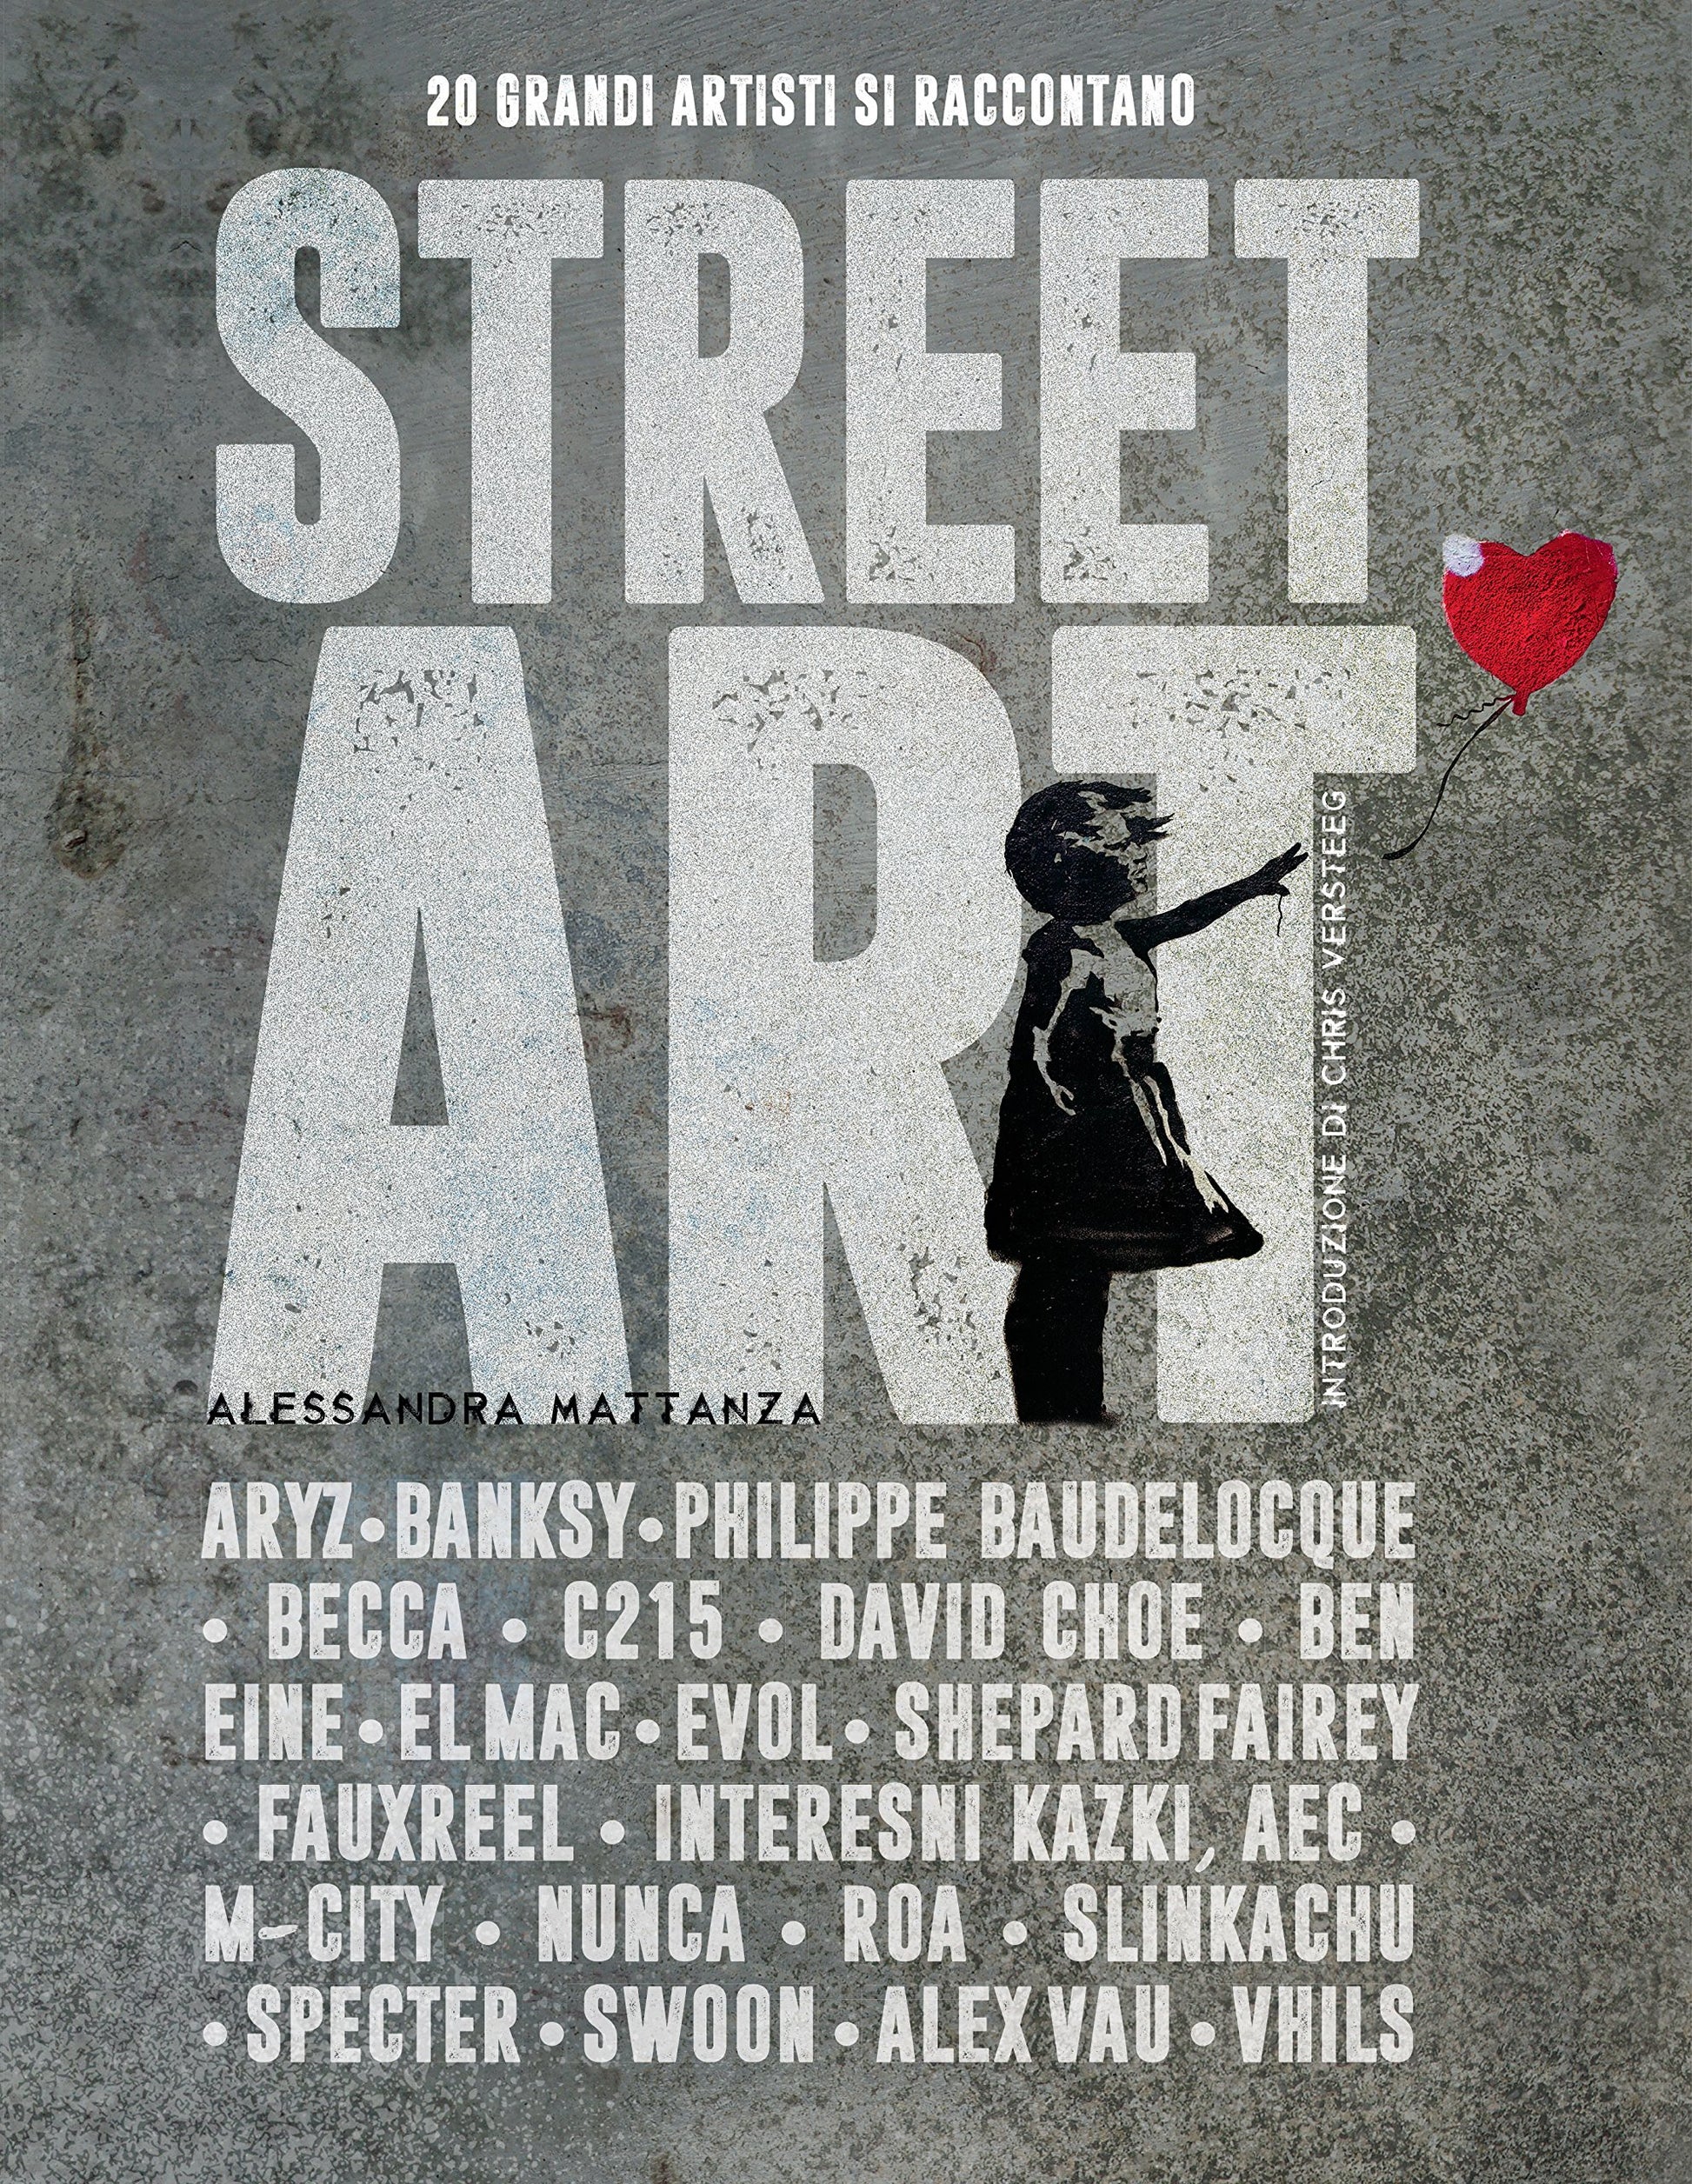 Alessandra Mattanza | BUY FROM AMAZON Italian Edition - Street art. 20 grandi artisti si raccontano. Ediz. illustrata